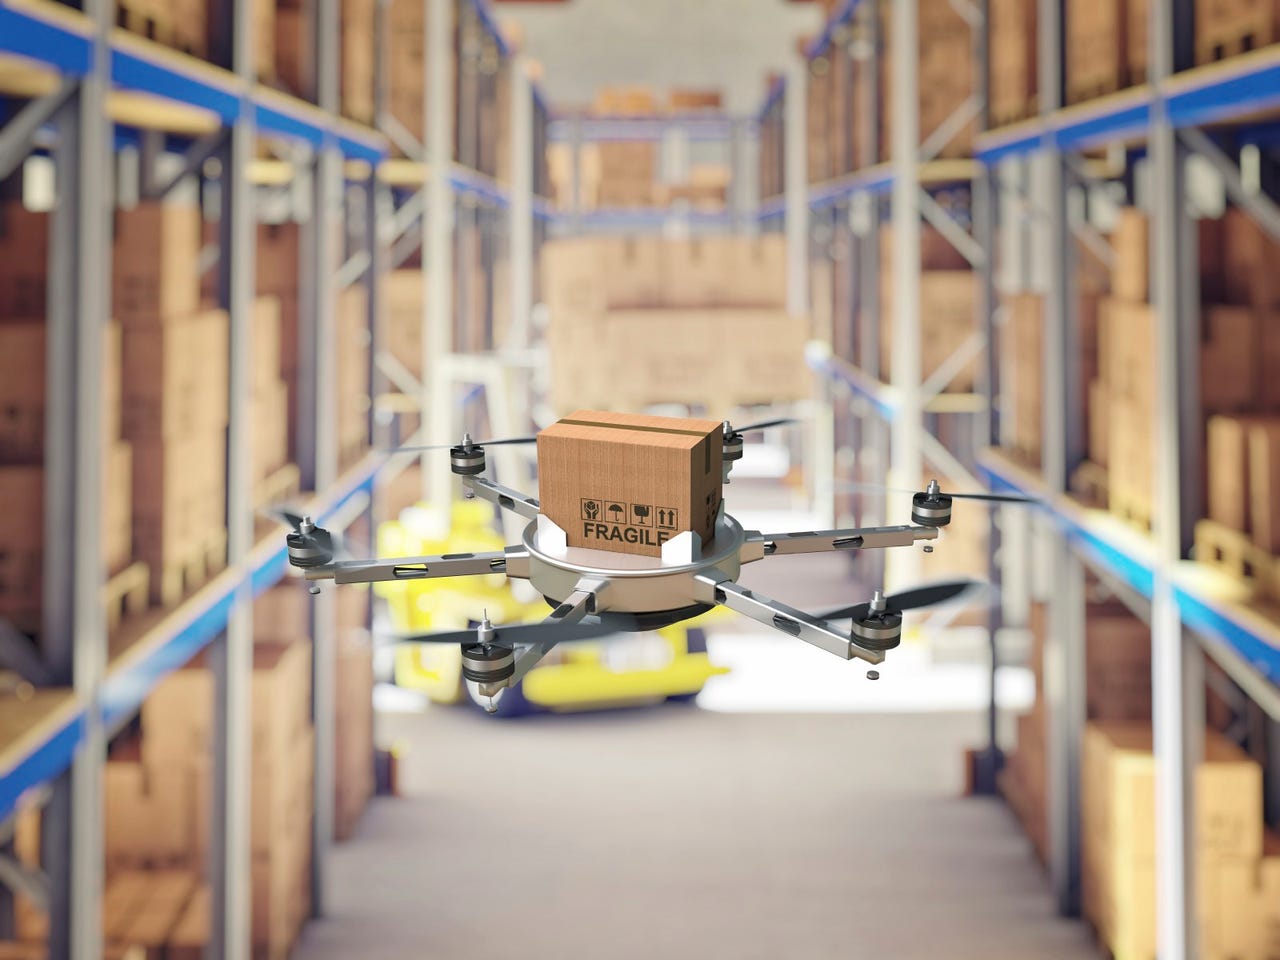 Walmart warehouse drones to start work soon